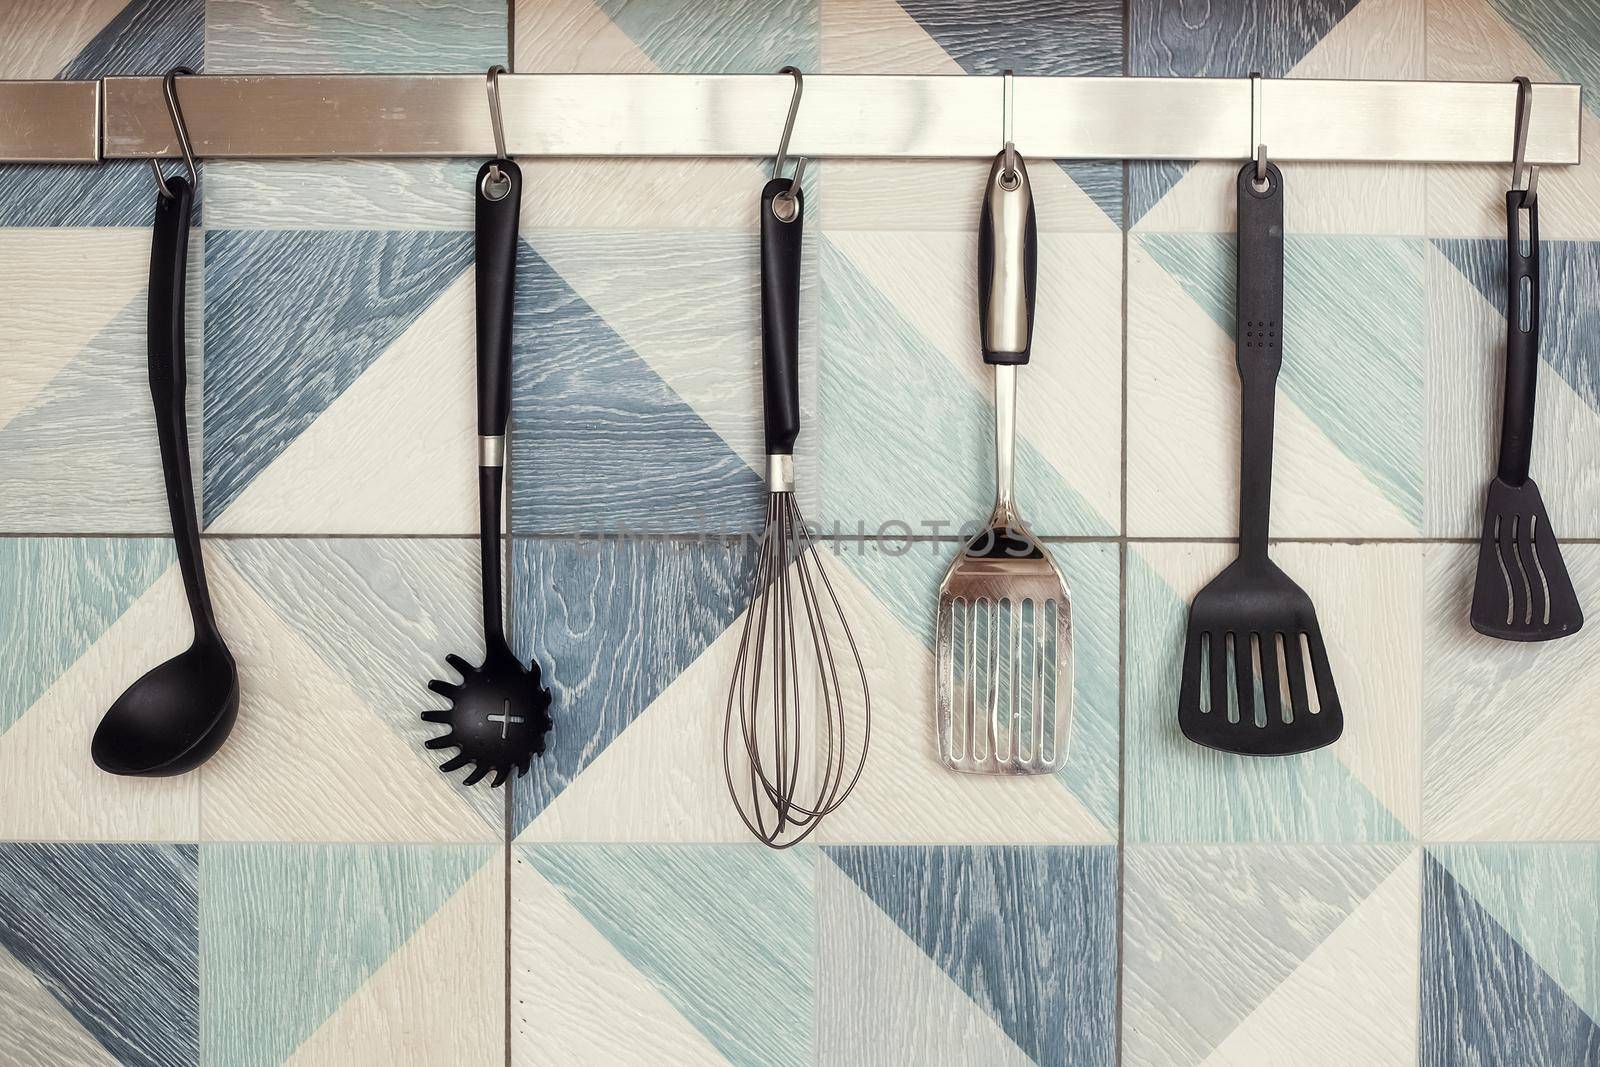 Kitchen spatulas handing on railing on a tiled wall with blue geometric pattern by galinasharapova